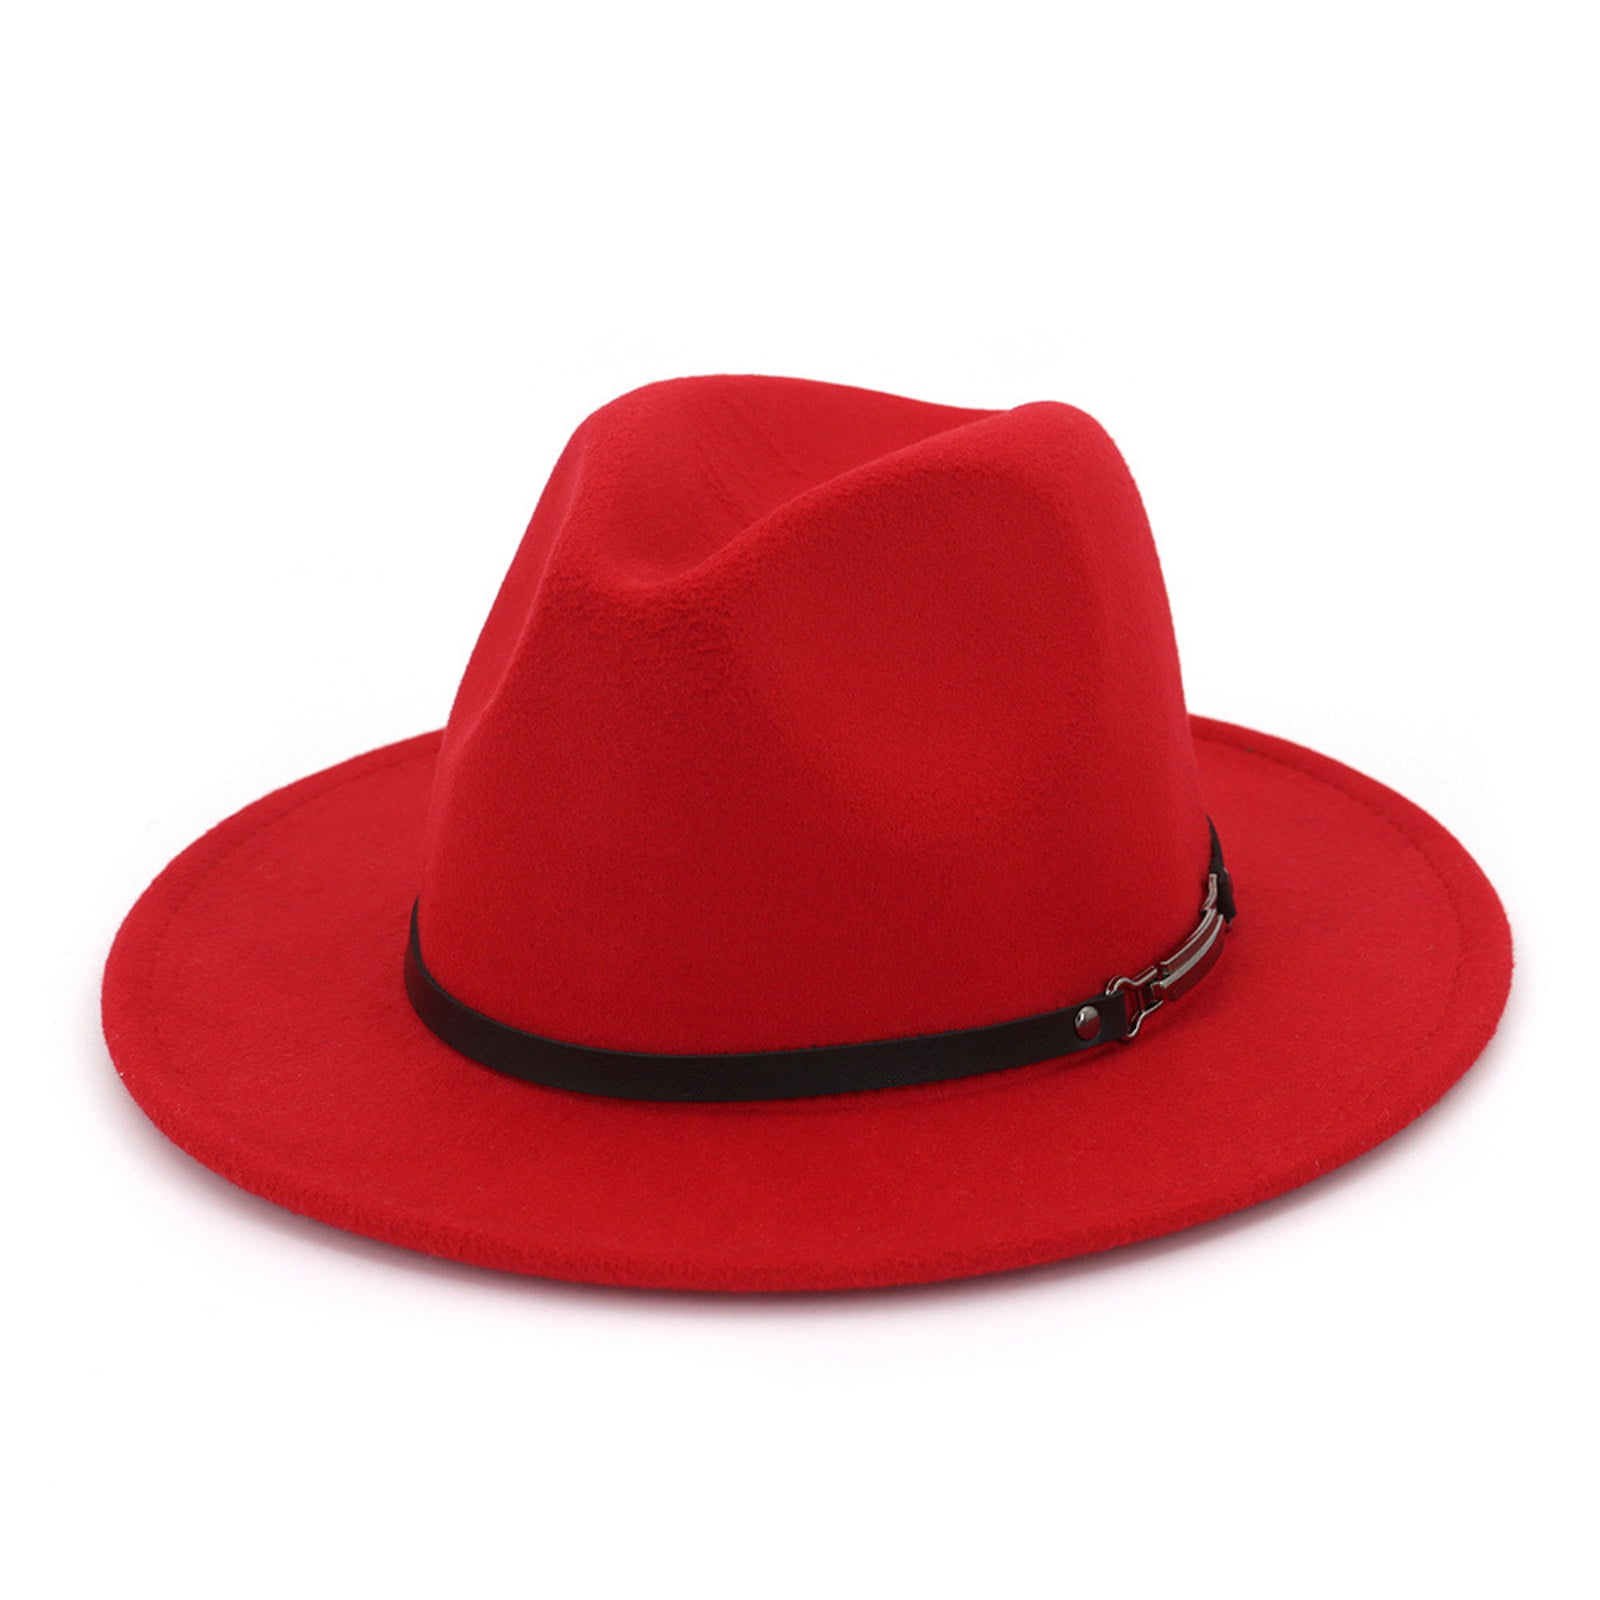 Unisex Wide Brim Wool Belt Felt Flat Top Fedora Hat Party Church Trilby Hats Cap